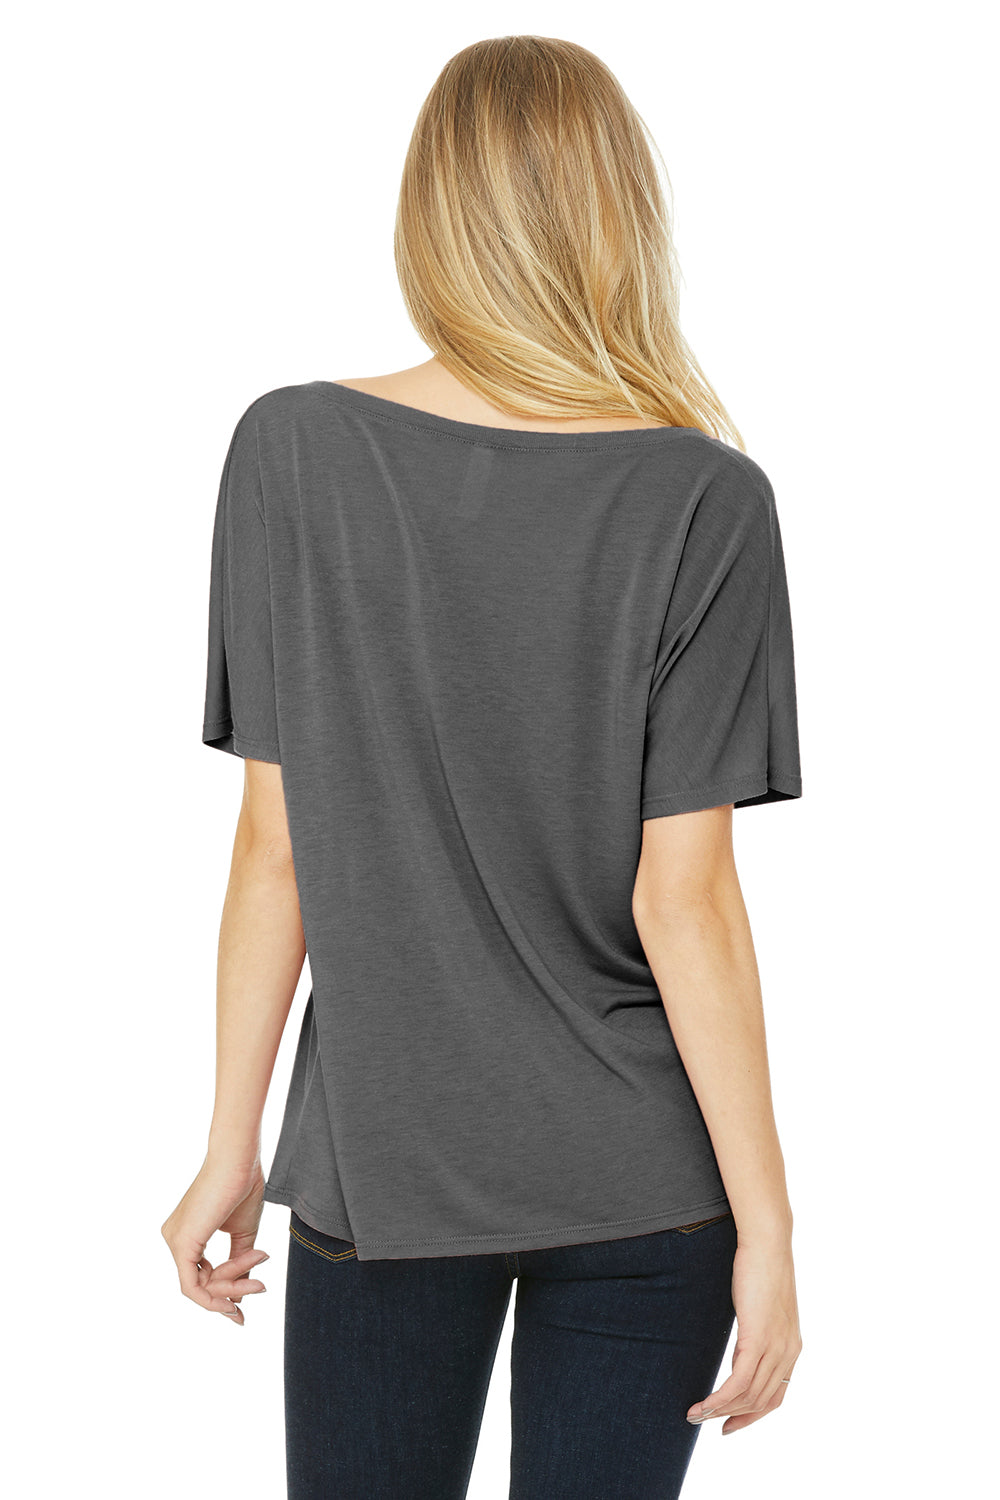 Bella + Canvas 8815 Womens Slouchy Short Sleeve V-Neck T-Shirt Grey Triblend Back